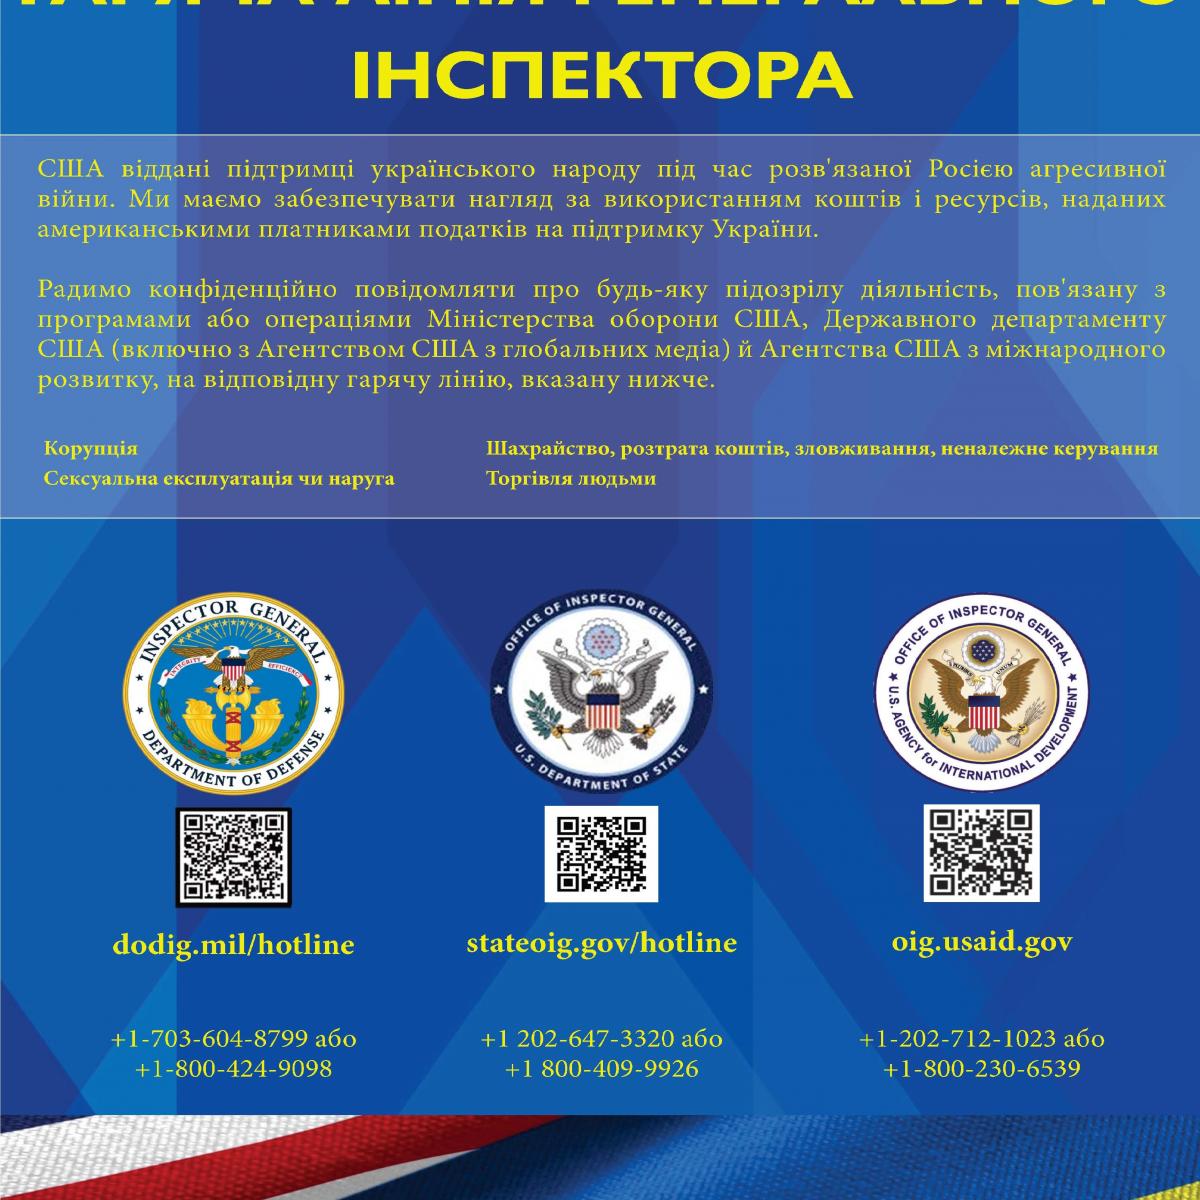 Hotline Information for Reporting Ukraine-Related Misconduct (Ukrainian